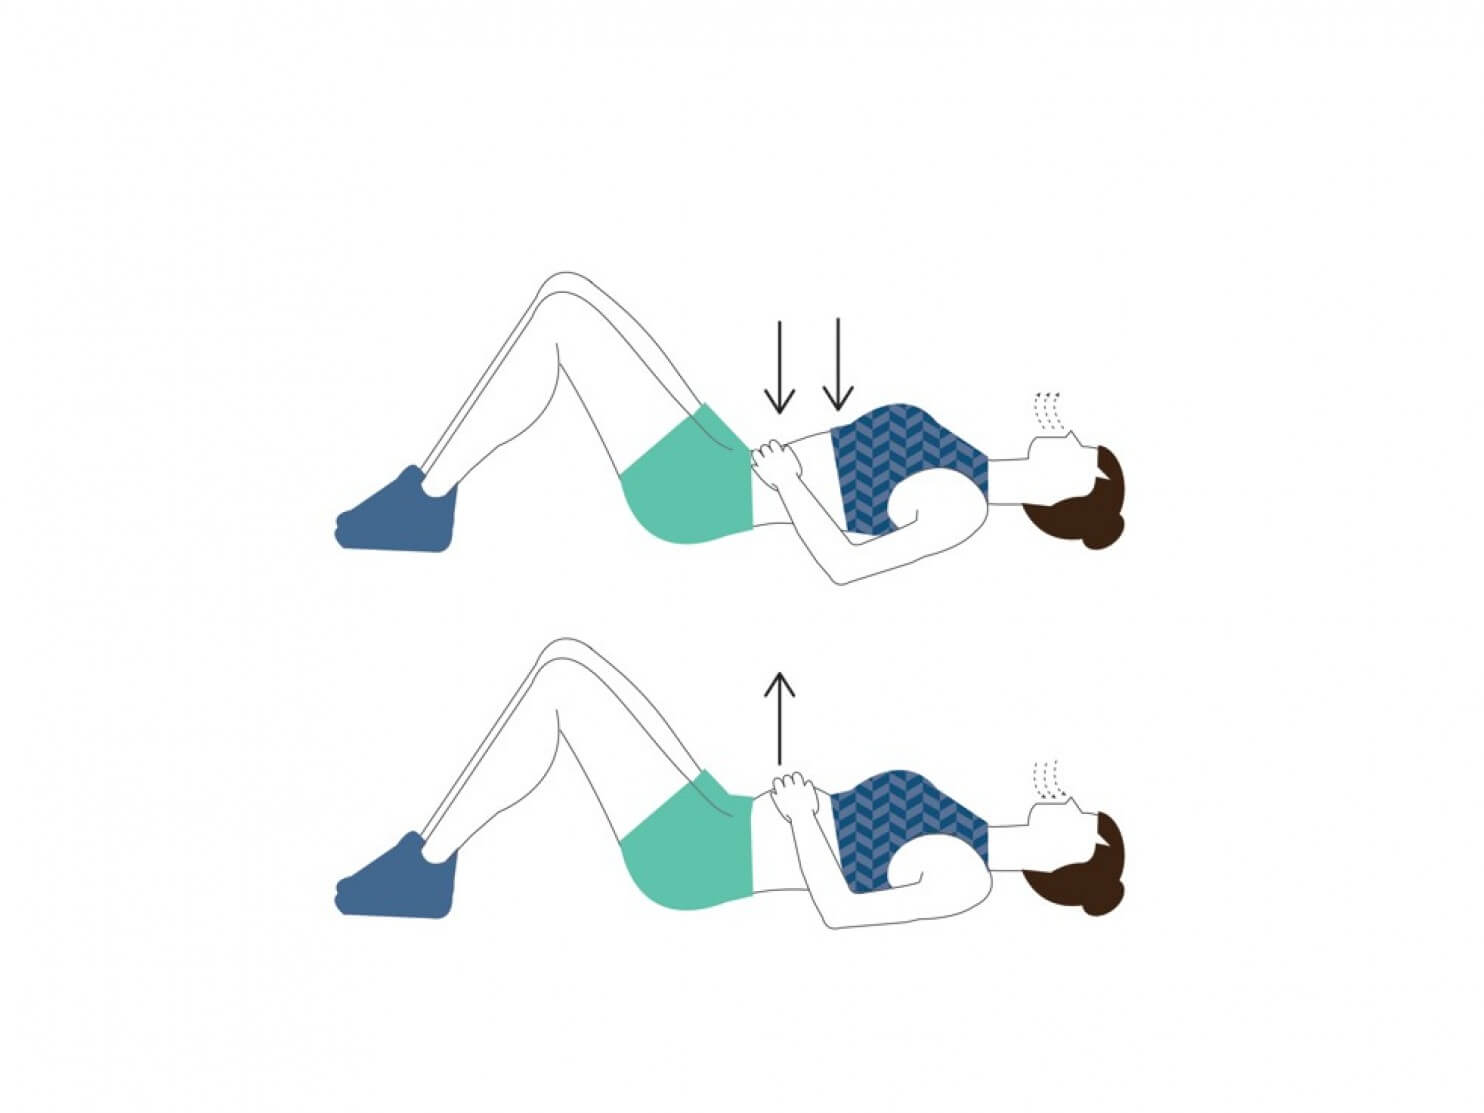 Breathing exercises diaphragmatic or abdominal breathing